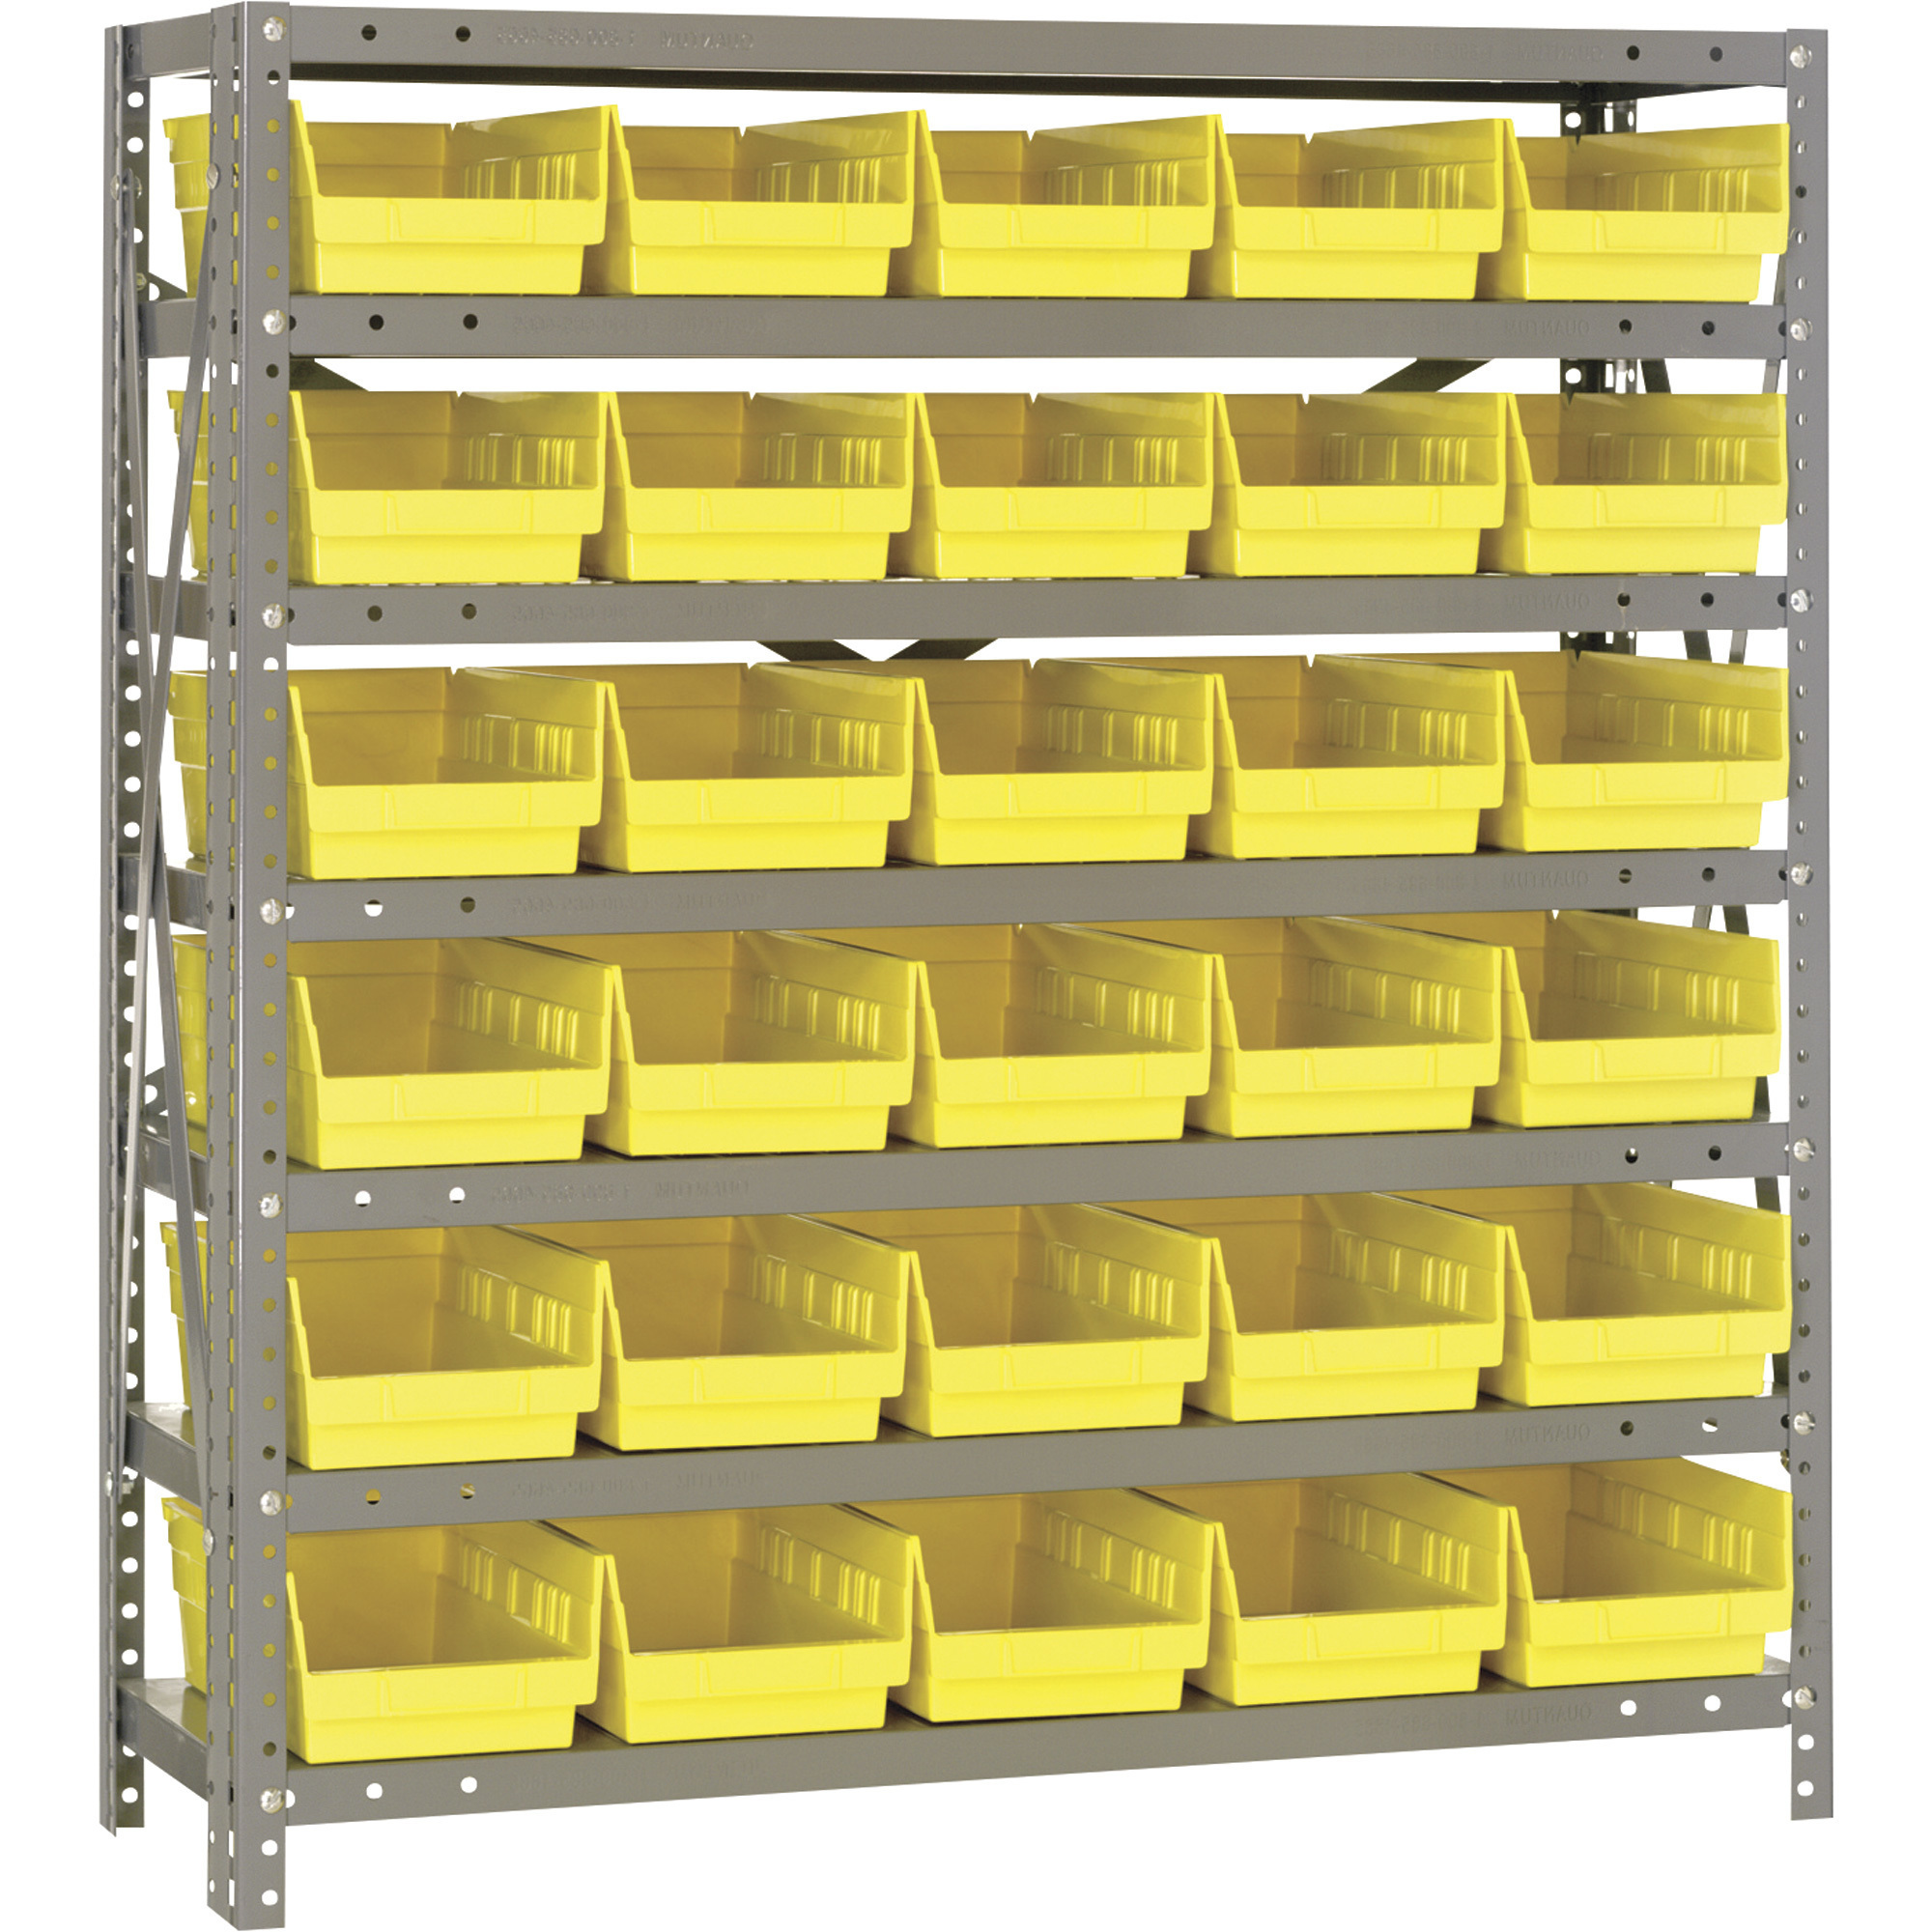 Quantum Storage Single Sided Steel Shelving Unit with 30 Bins, 36Inch W x 12Inch D x 39Inch H Rack Size, Yellow, Model 1239-102Y